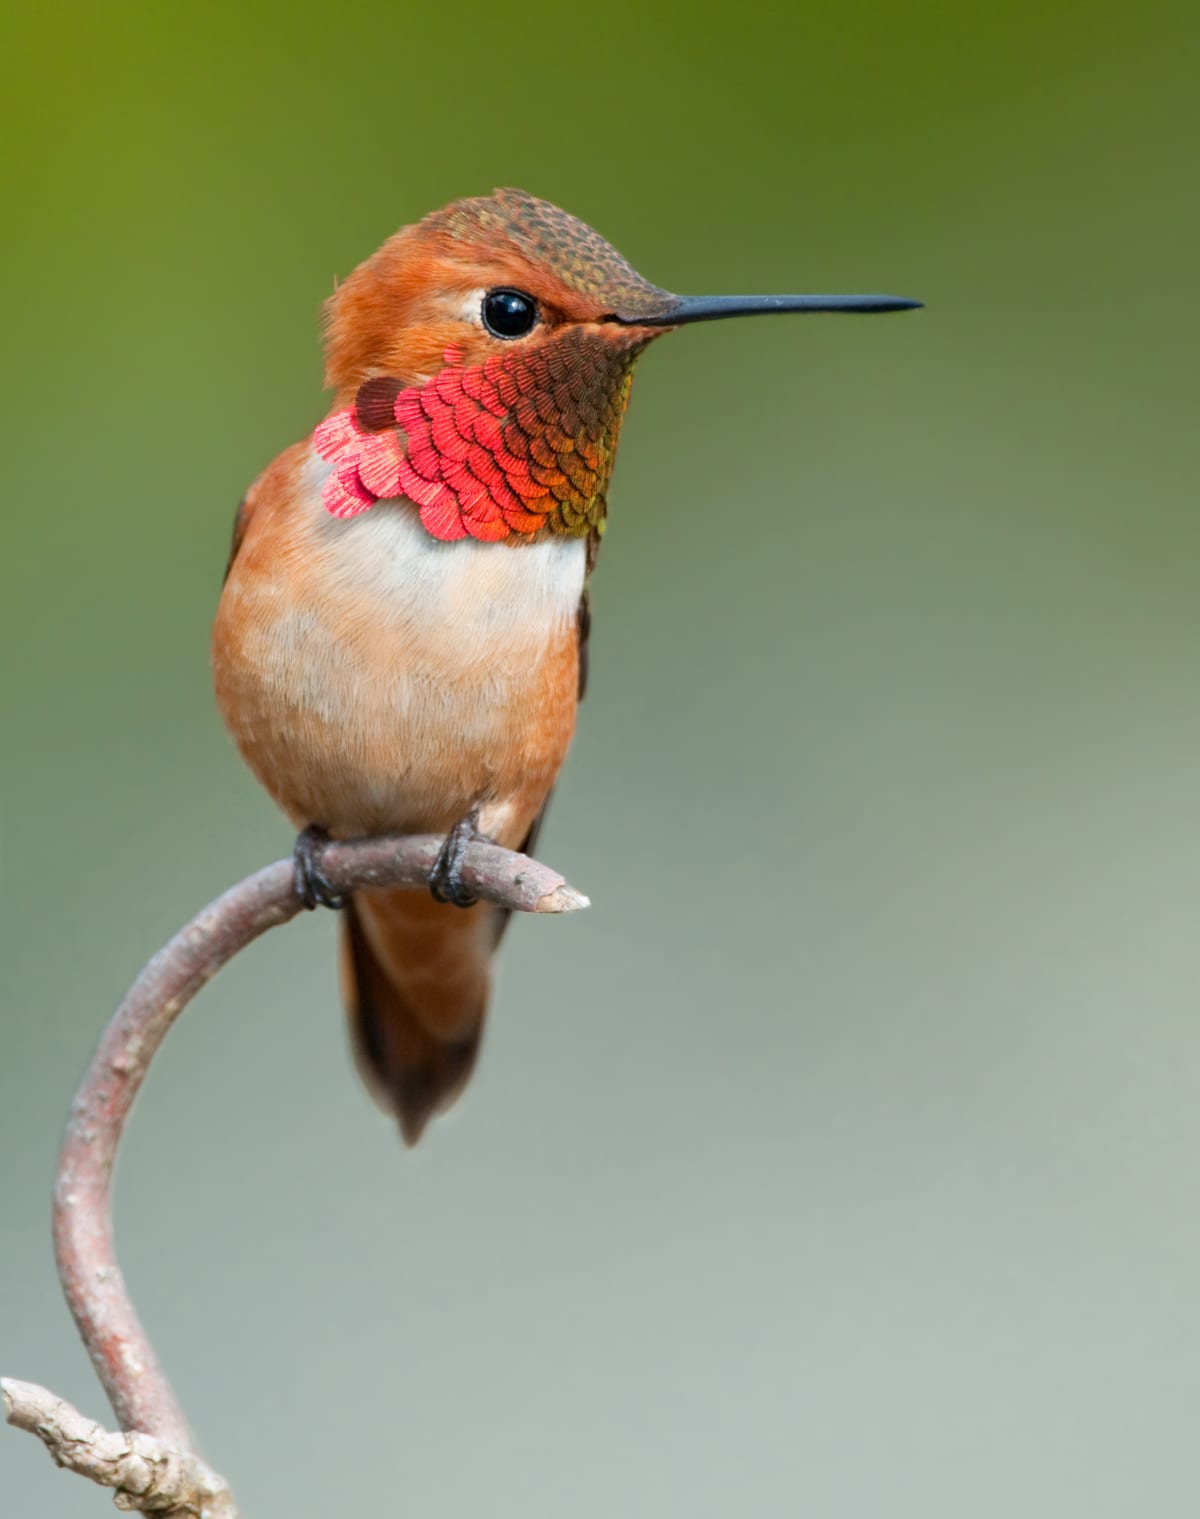 A hummingbird perched on a twig